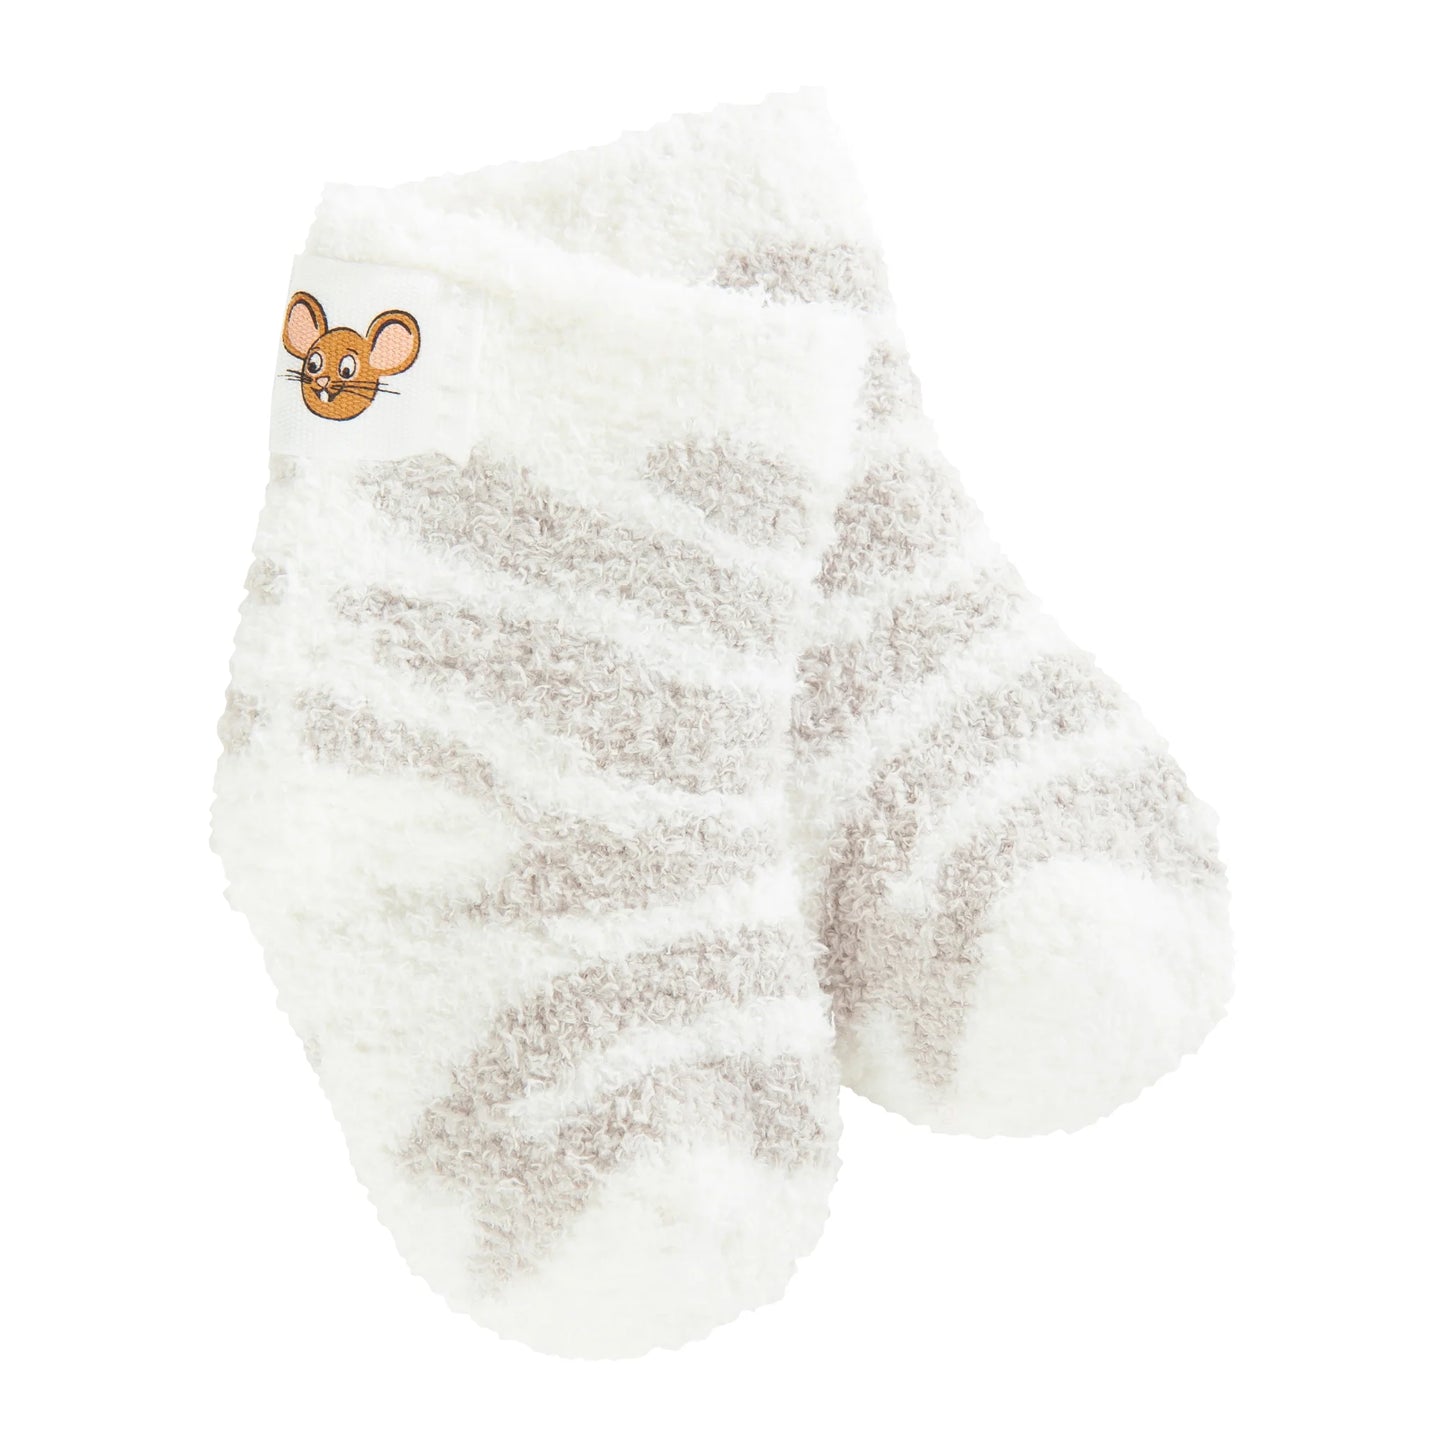 Worlds Softest Socks Infant